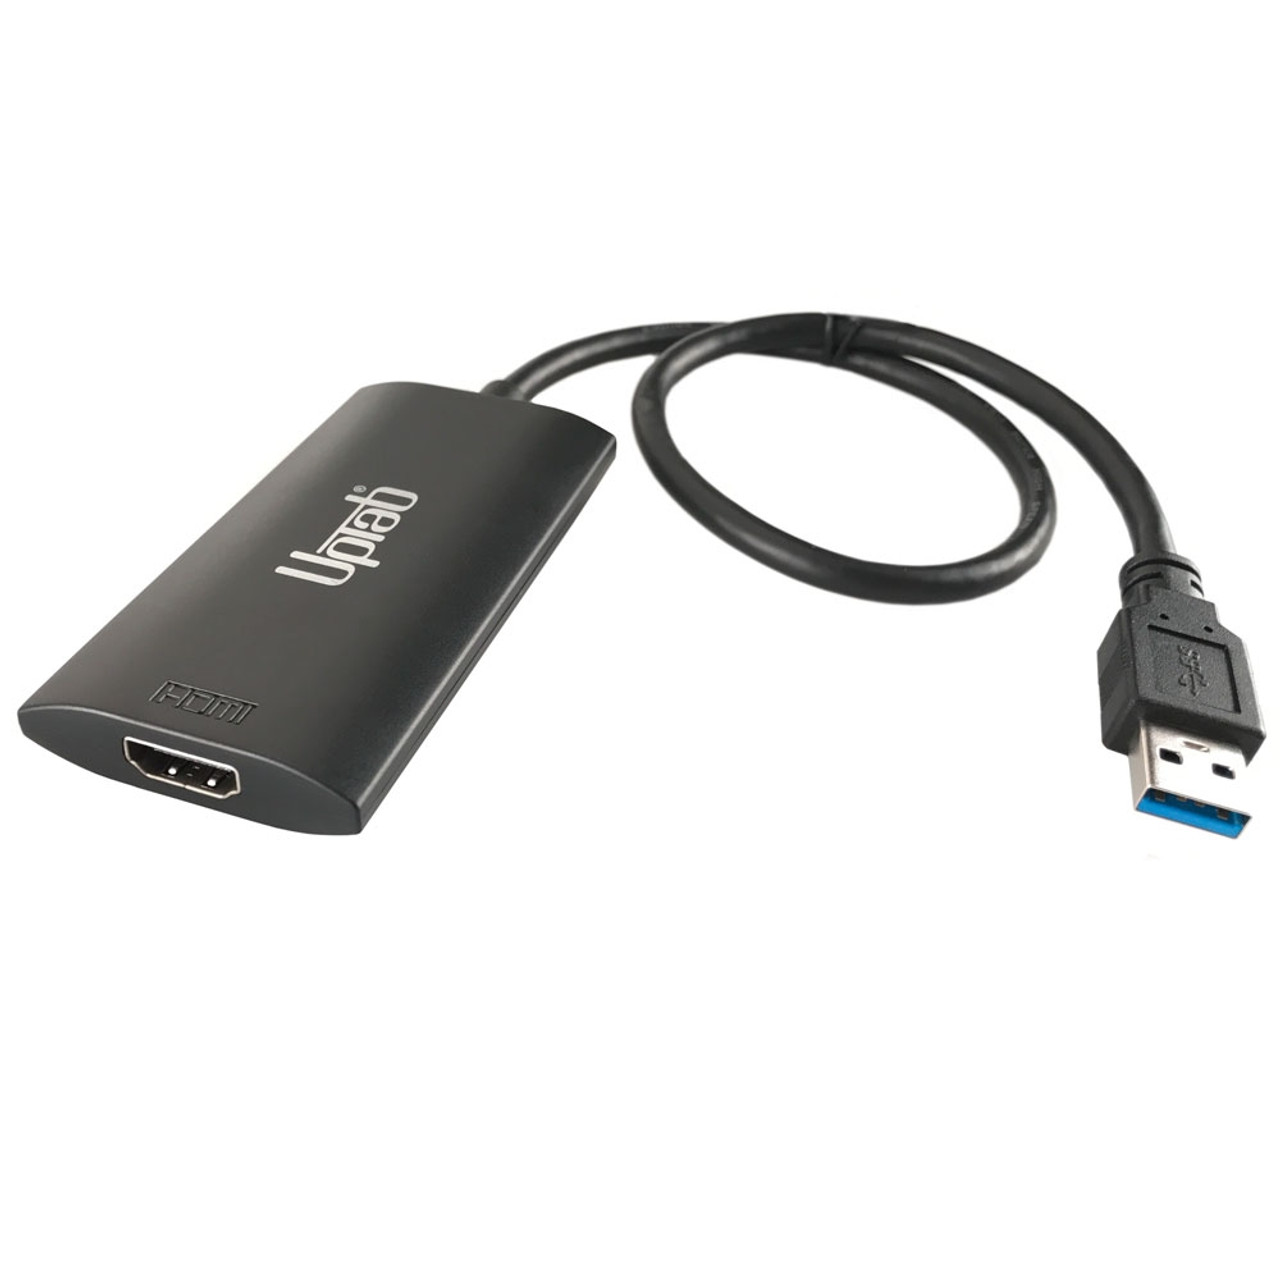 Adaptateur actif DisplayPort 1.2 vers HDMI 2.0a 4k@60hz - UPTab